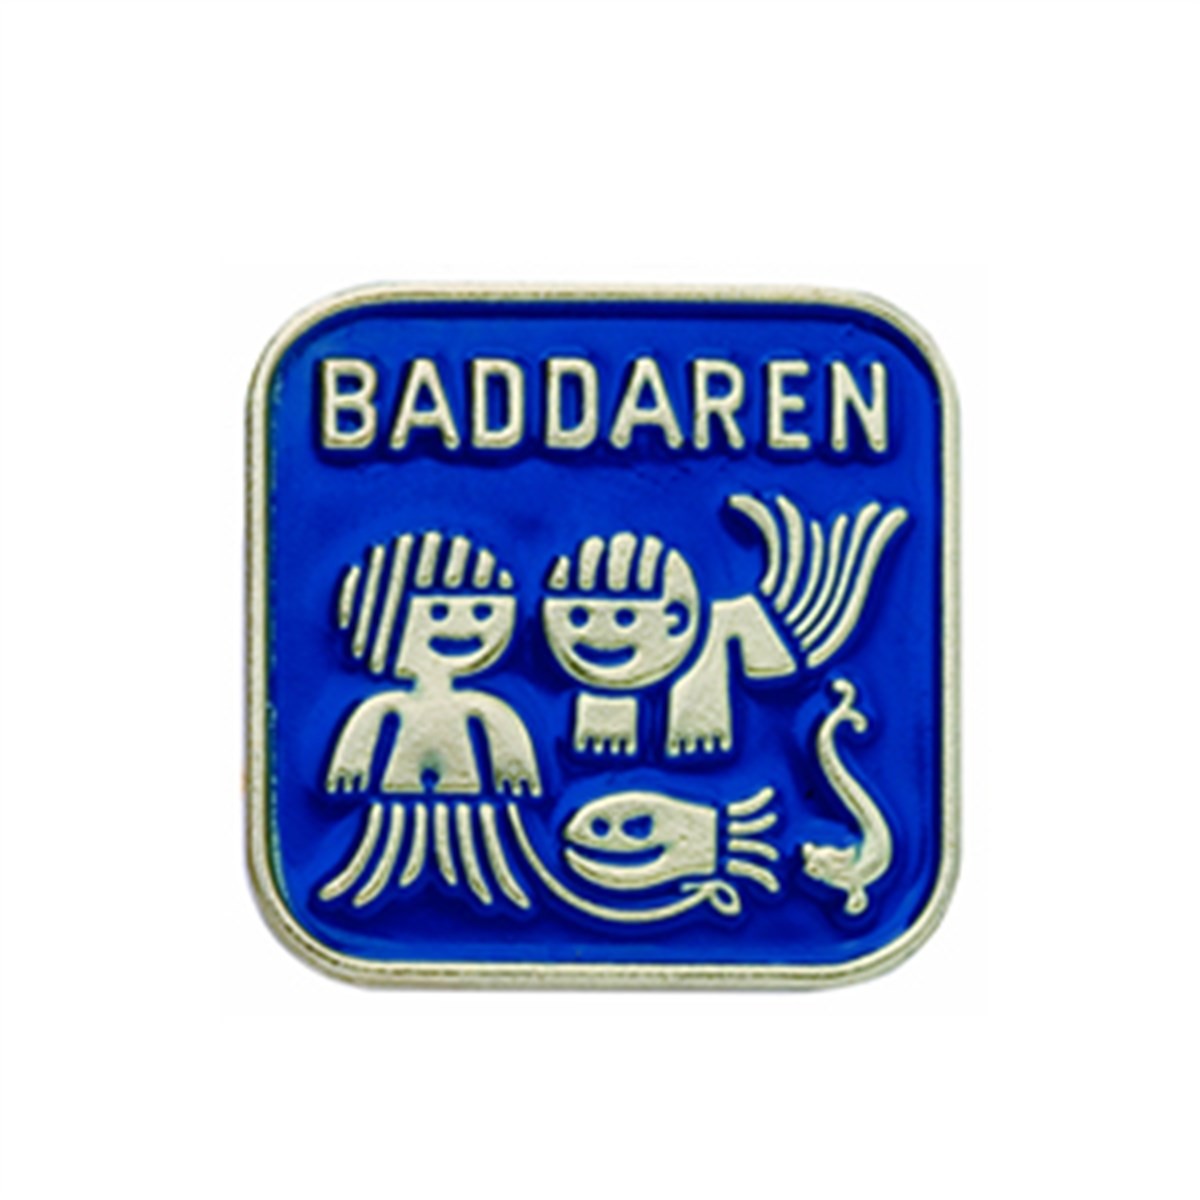 Baddaren